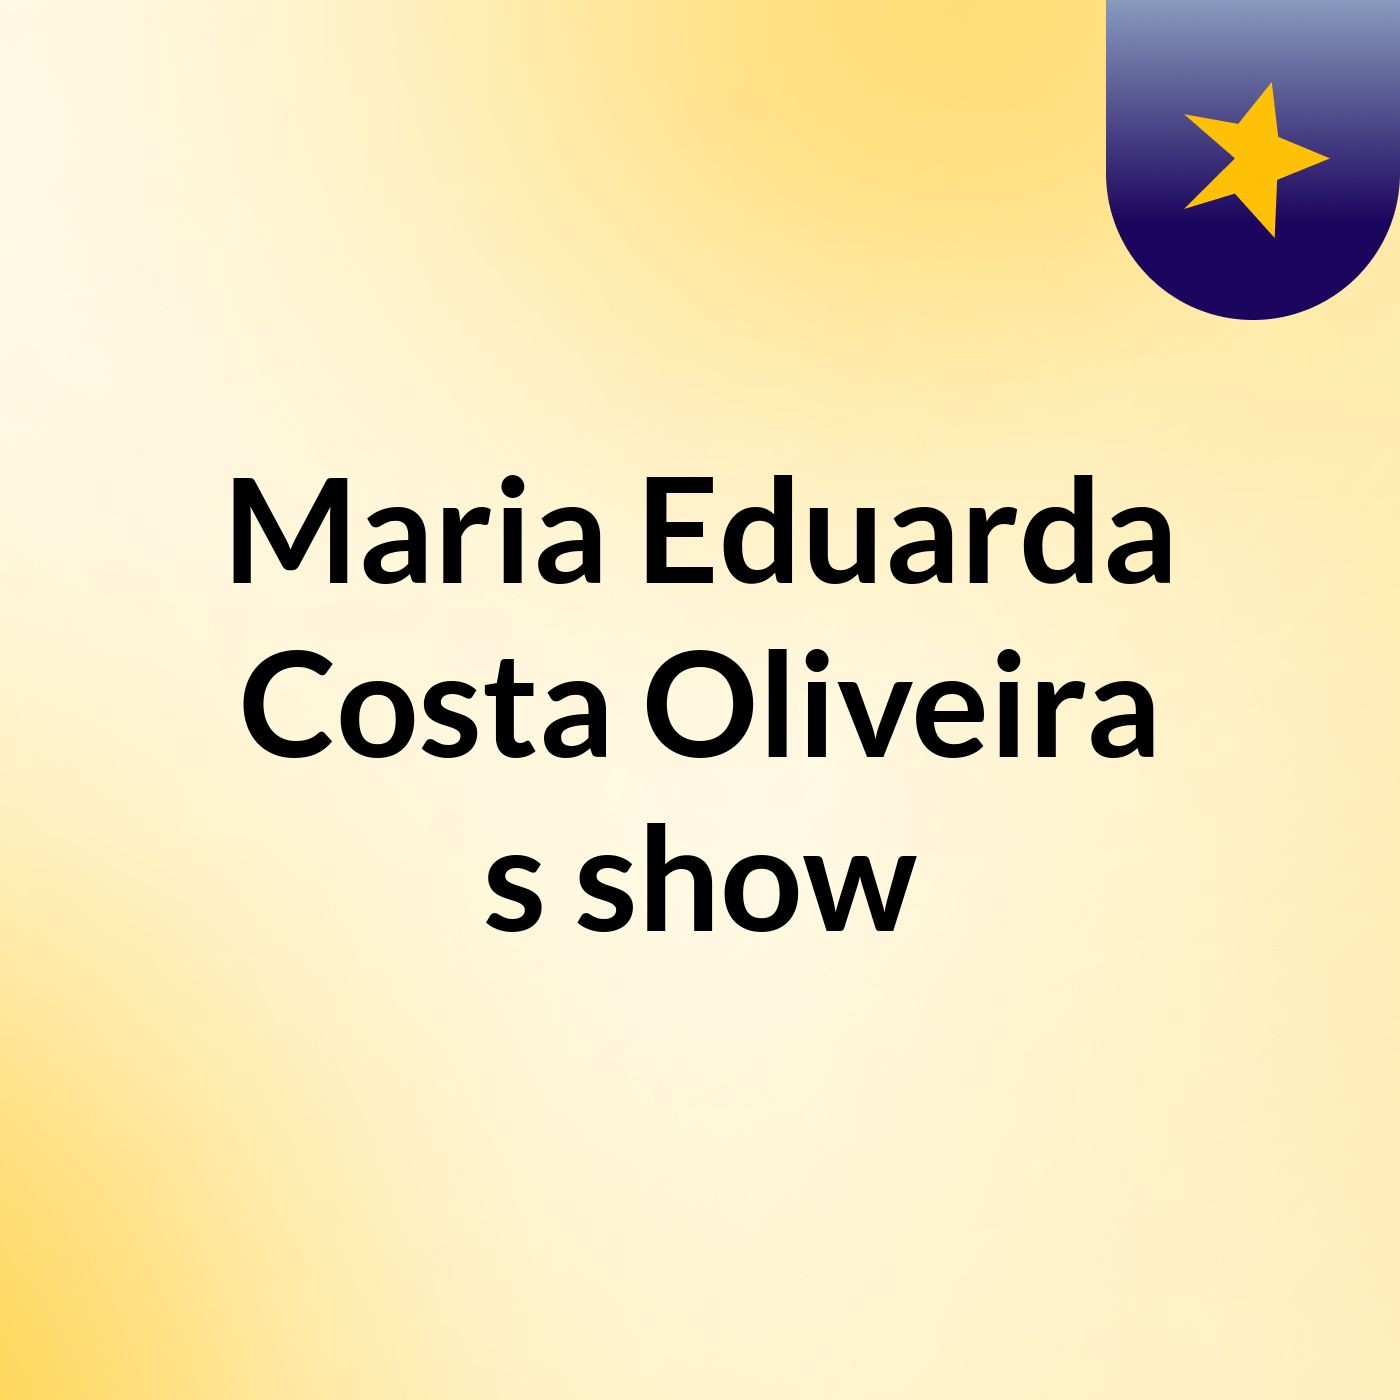 Maria Eduarda Costa Oliveira's show